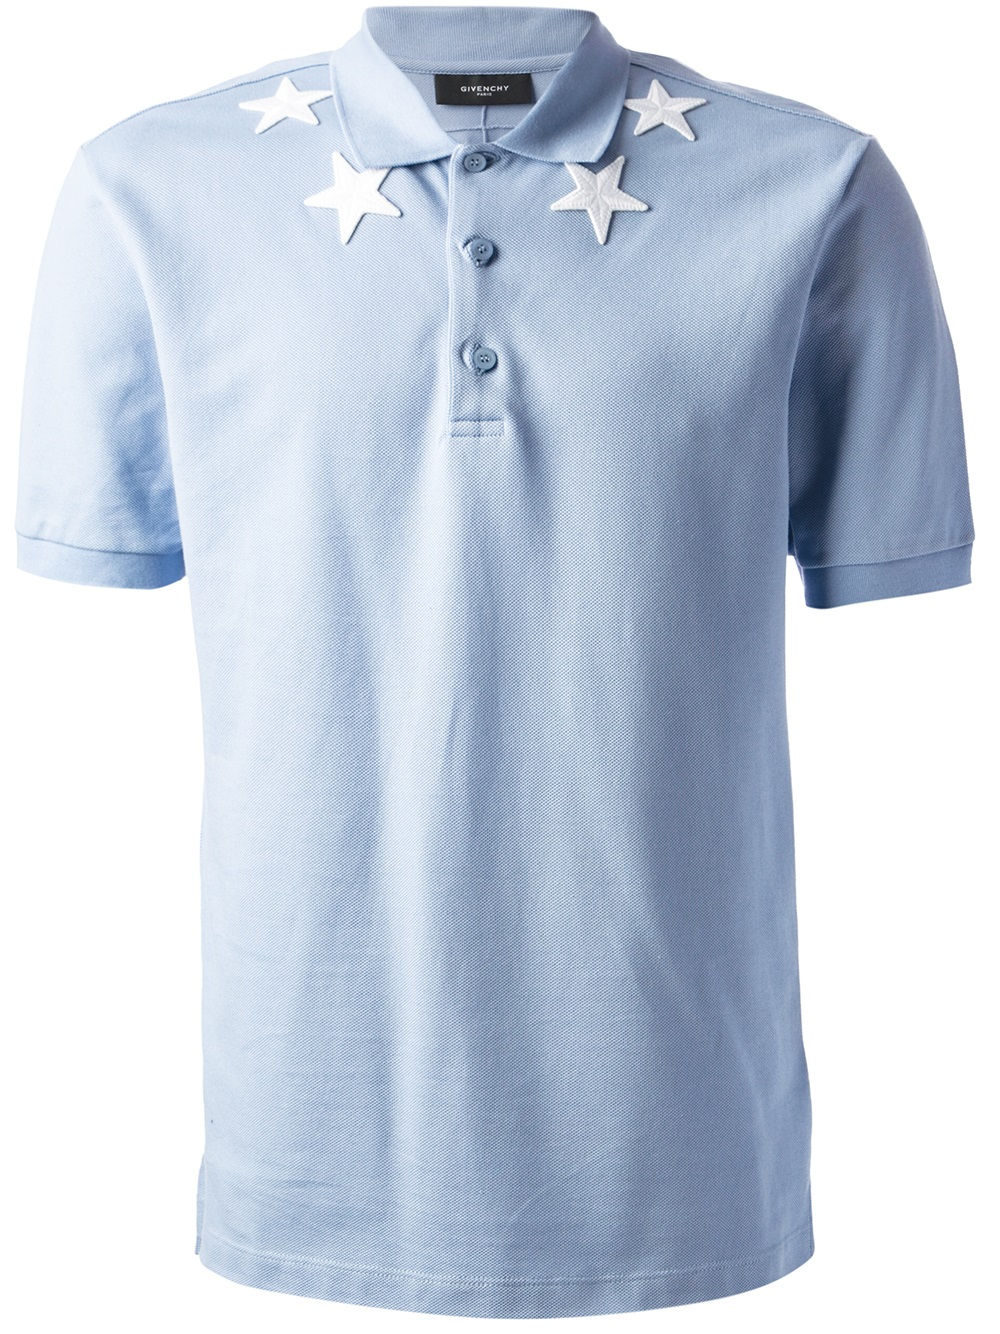 givenchy polo shirt stars